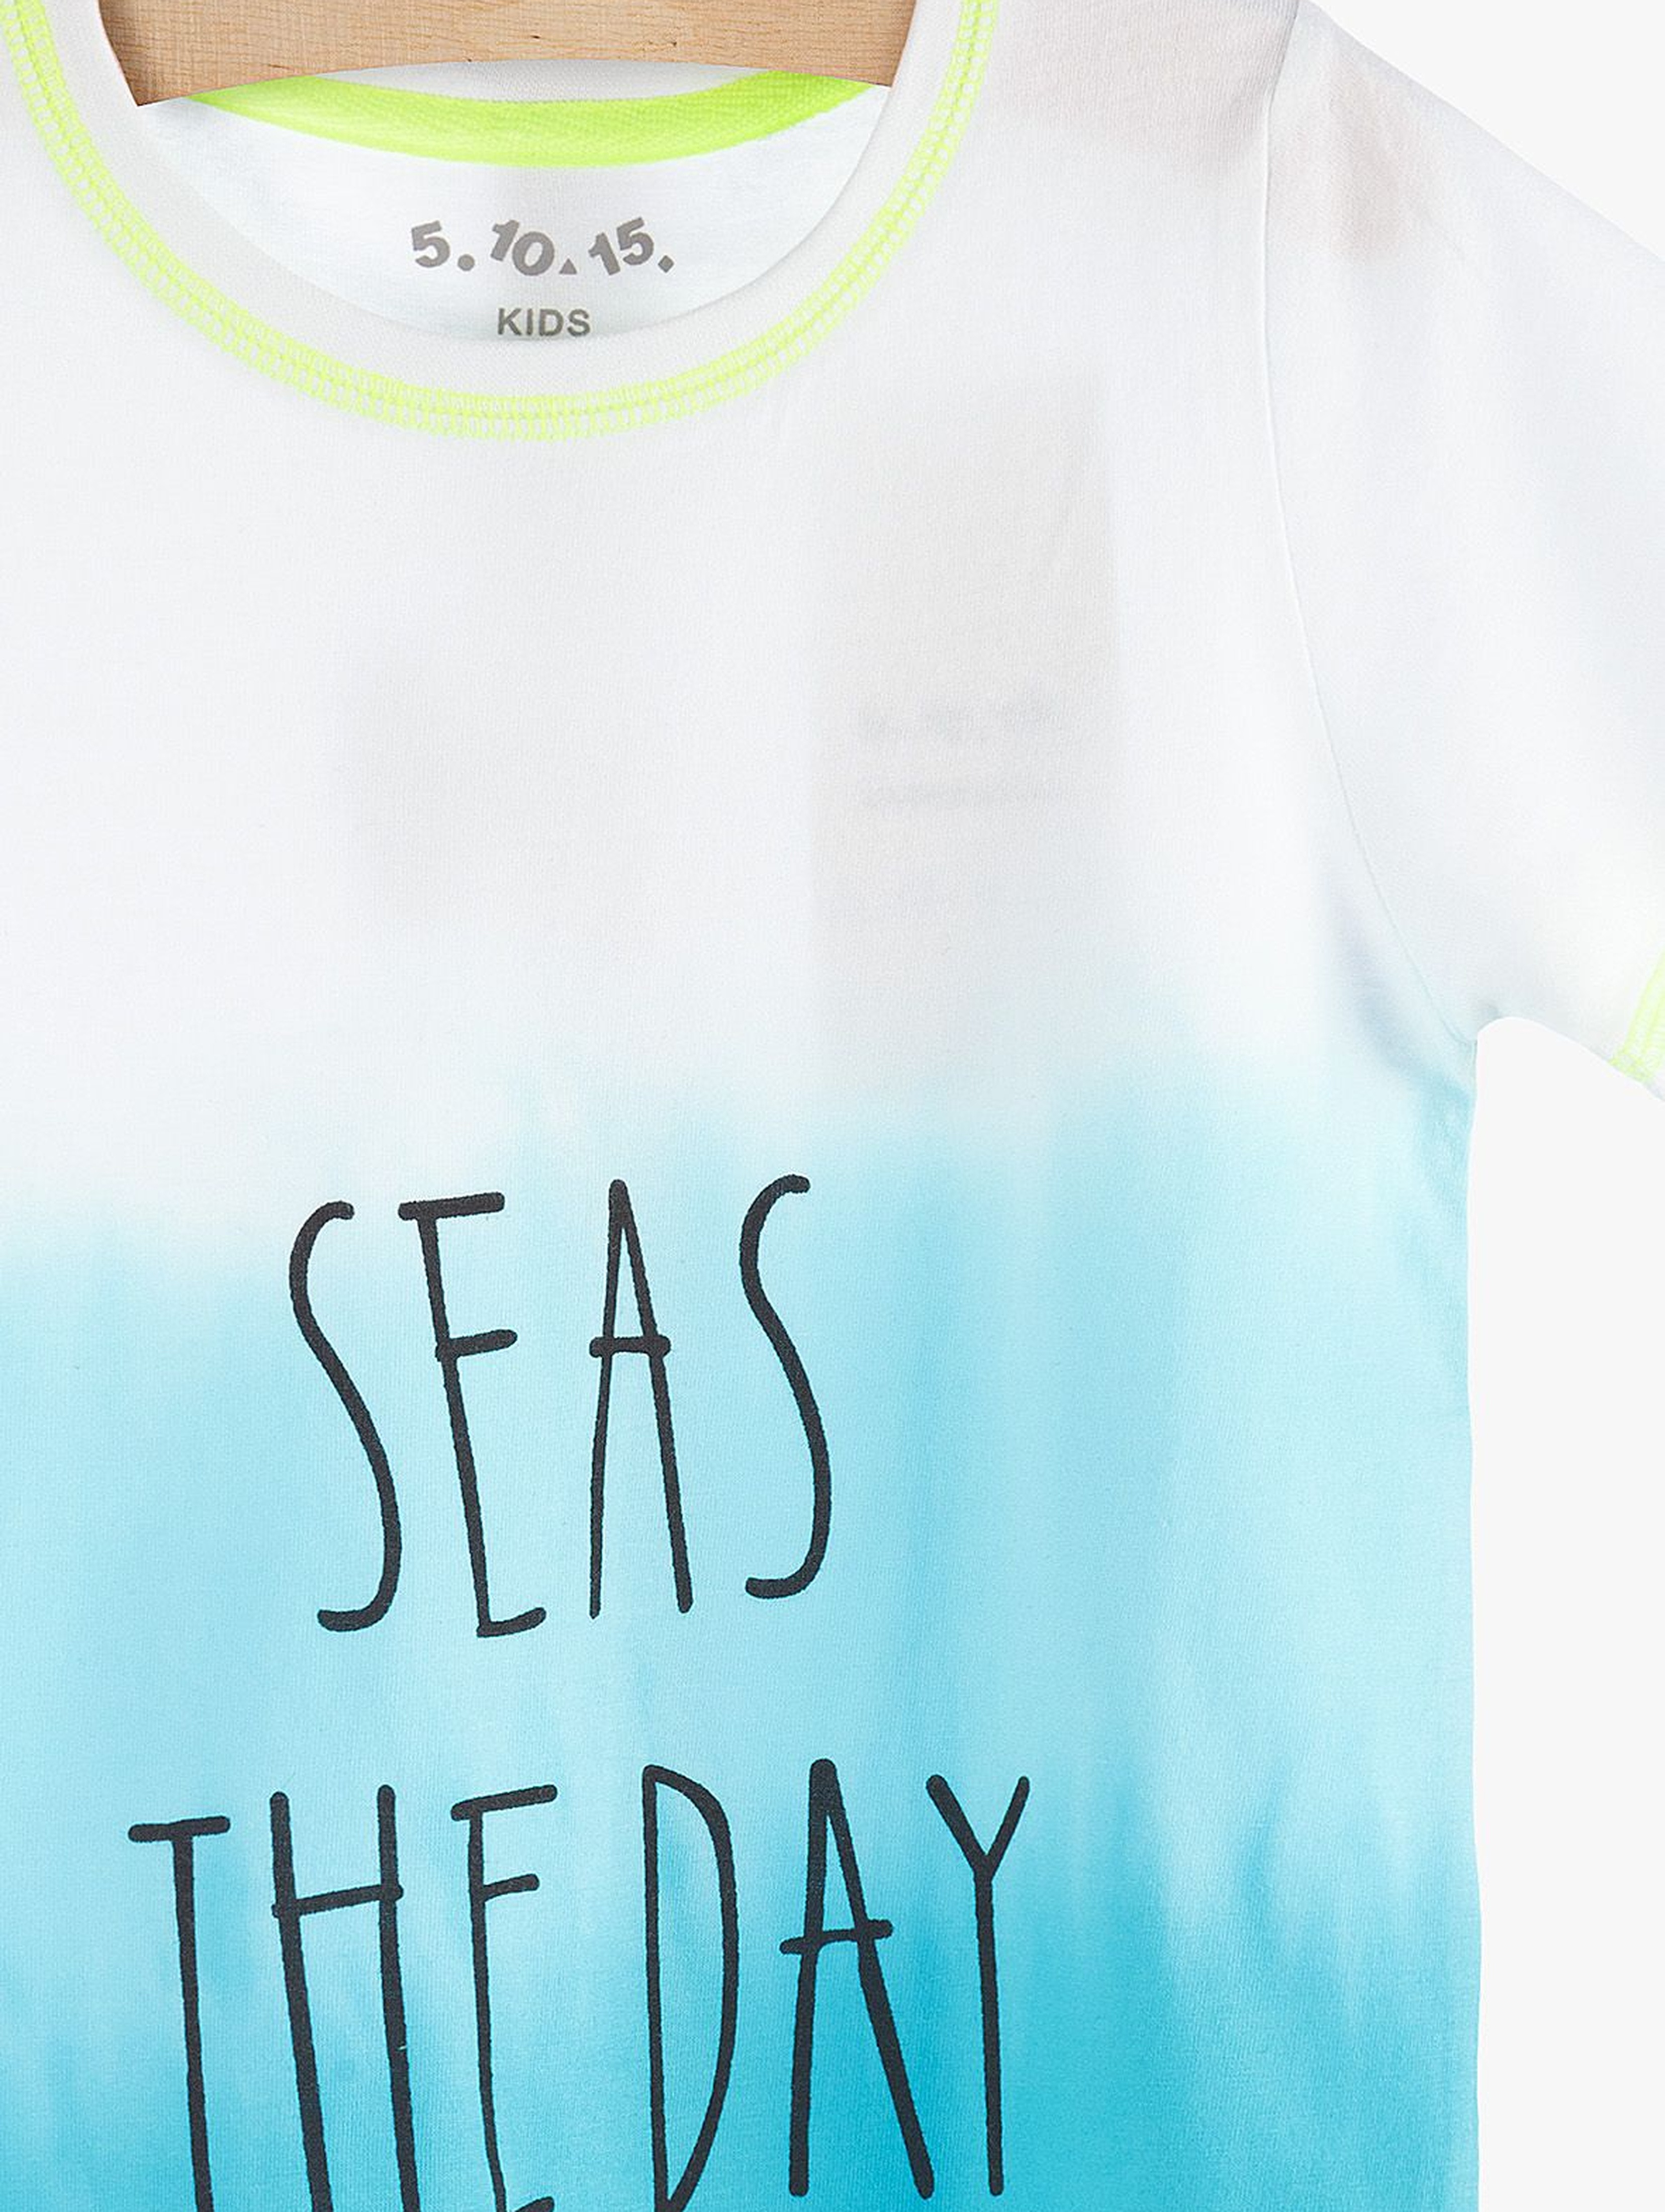 Pidżama chłopięca niebieska "Seas the Day"